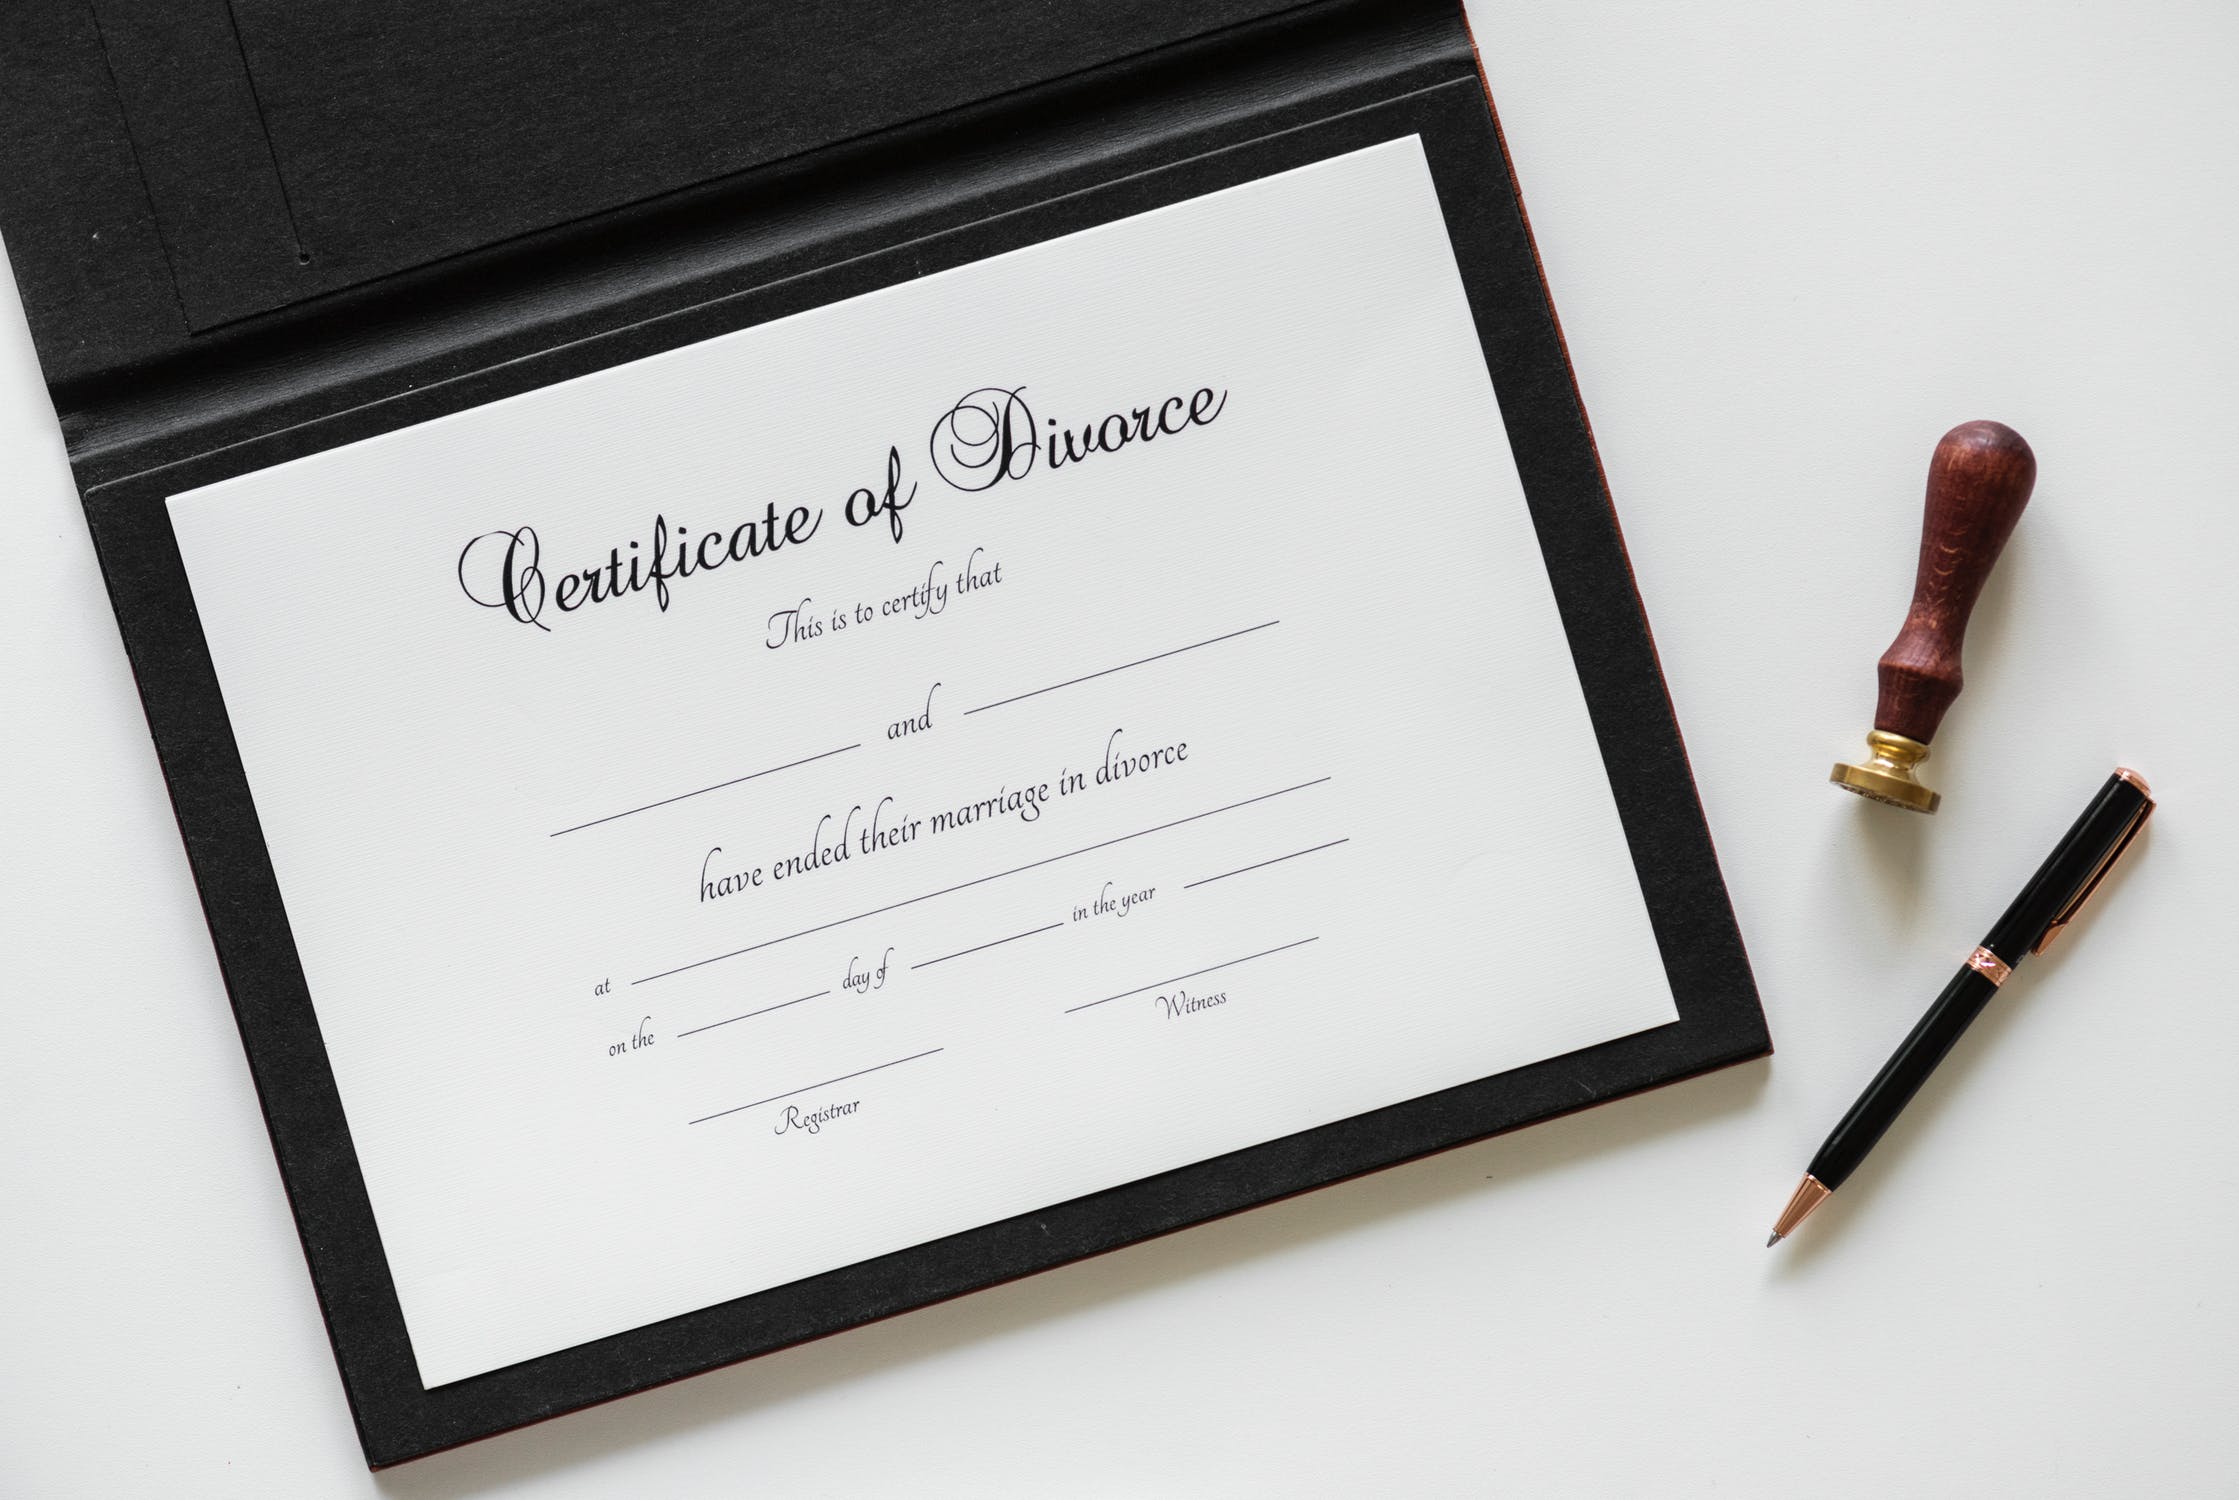 Certificate of Divorce Image